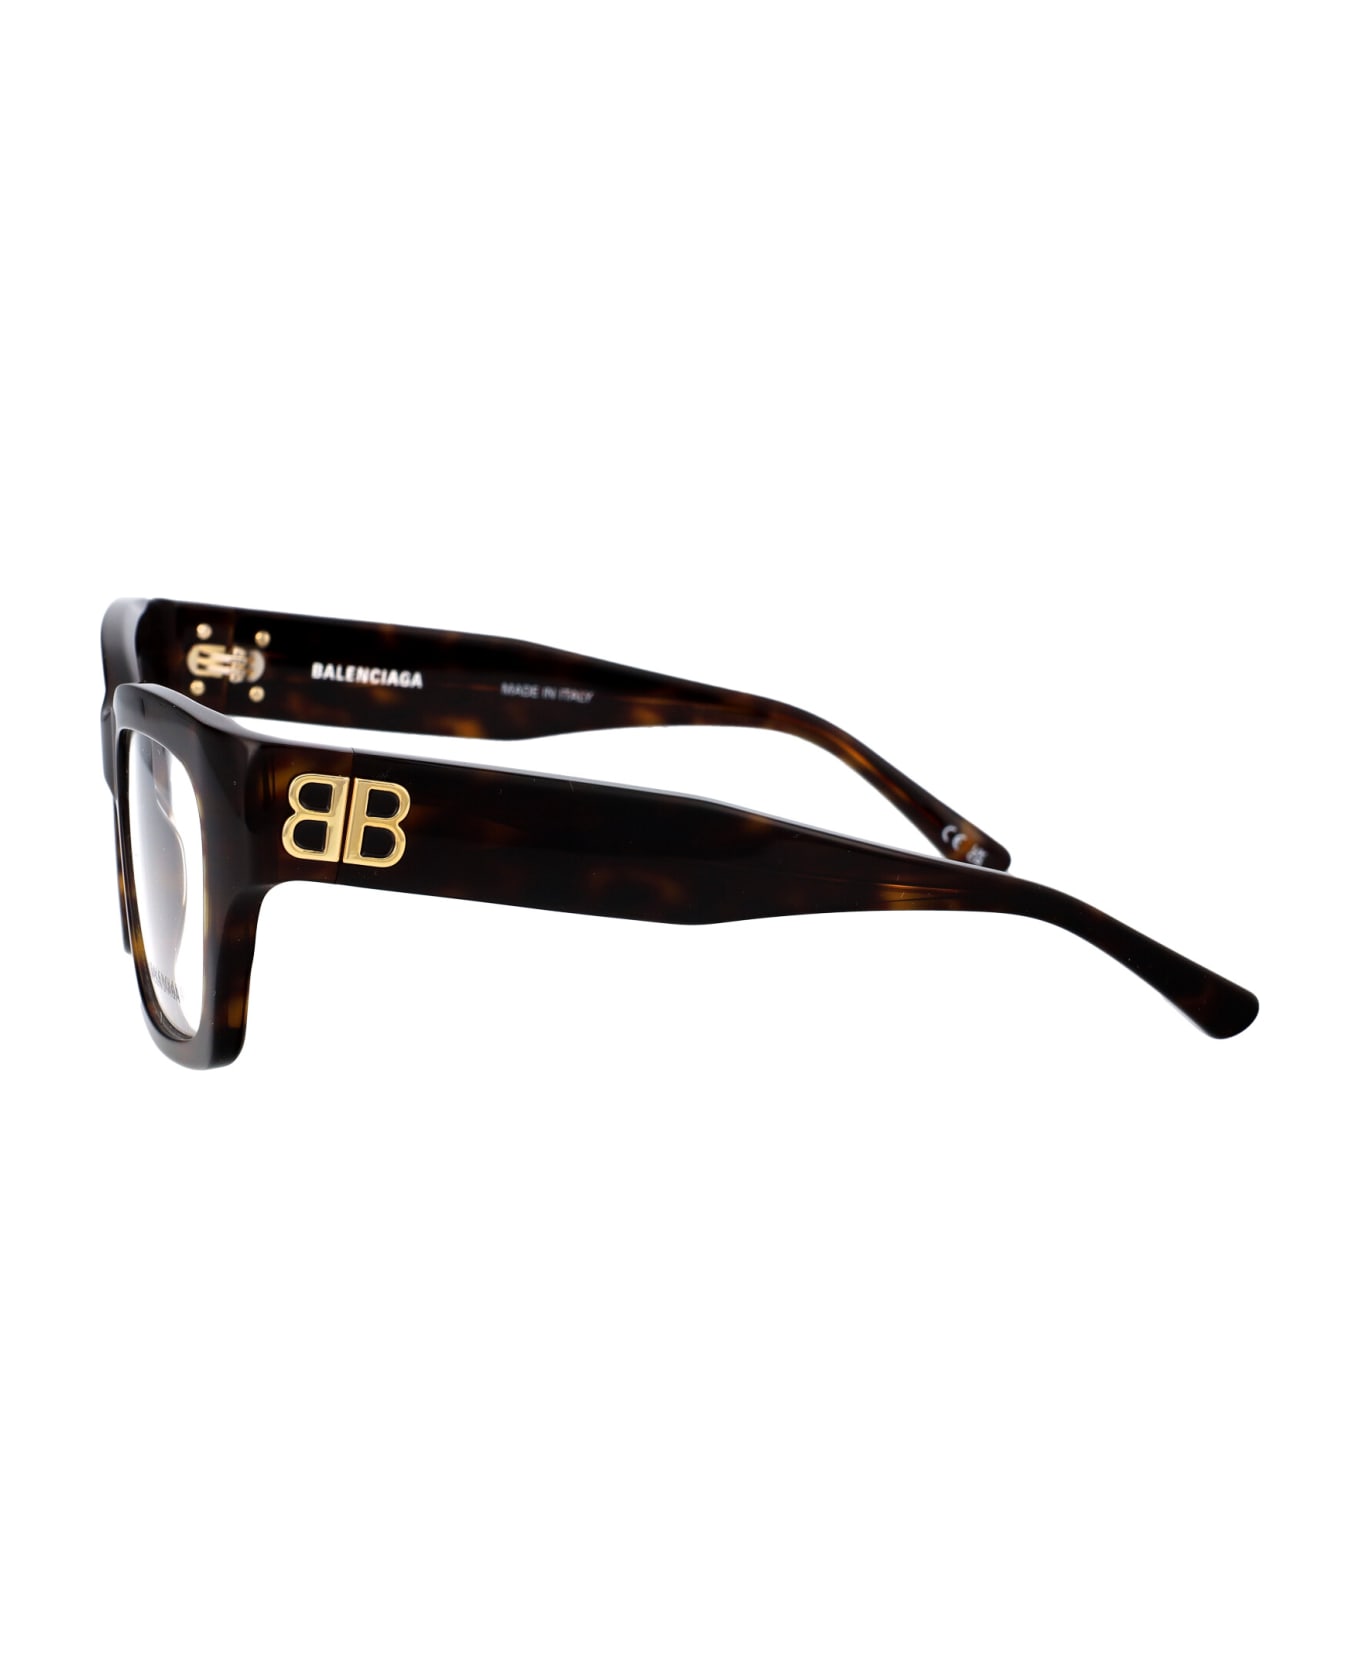 Balenciaga Eyewear Bb0325o Linea Everyday 007 Glasses - 007 HAVANA HAVANA TRANSPARENT